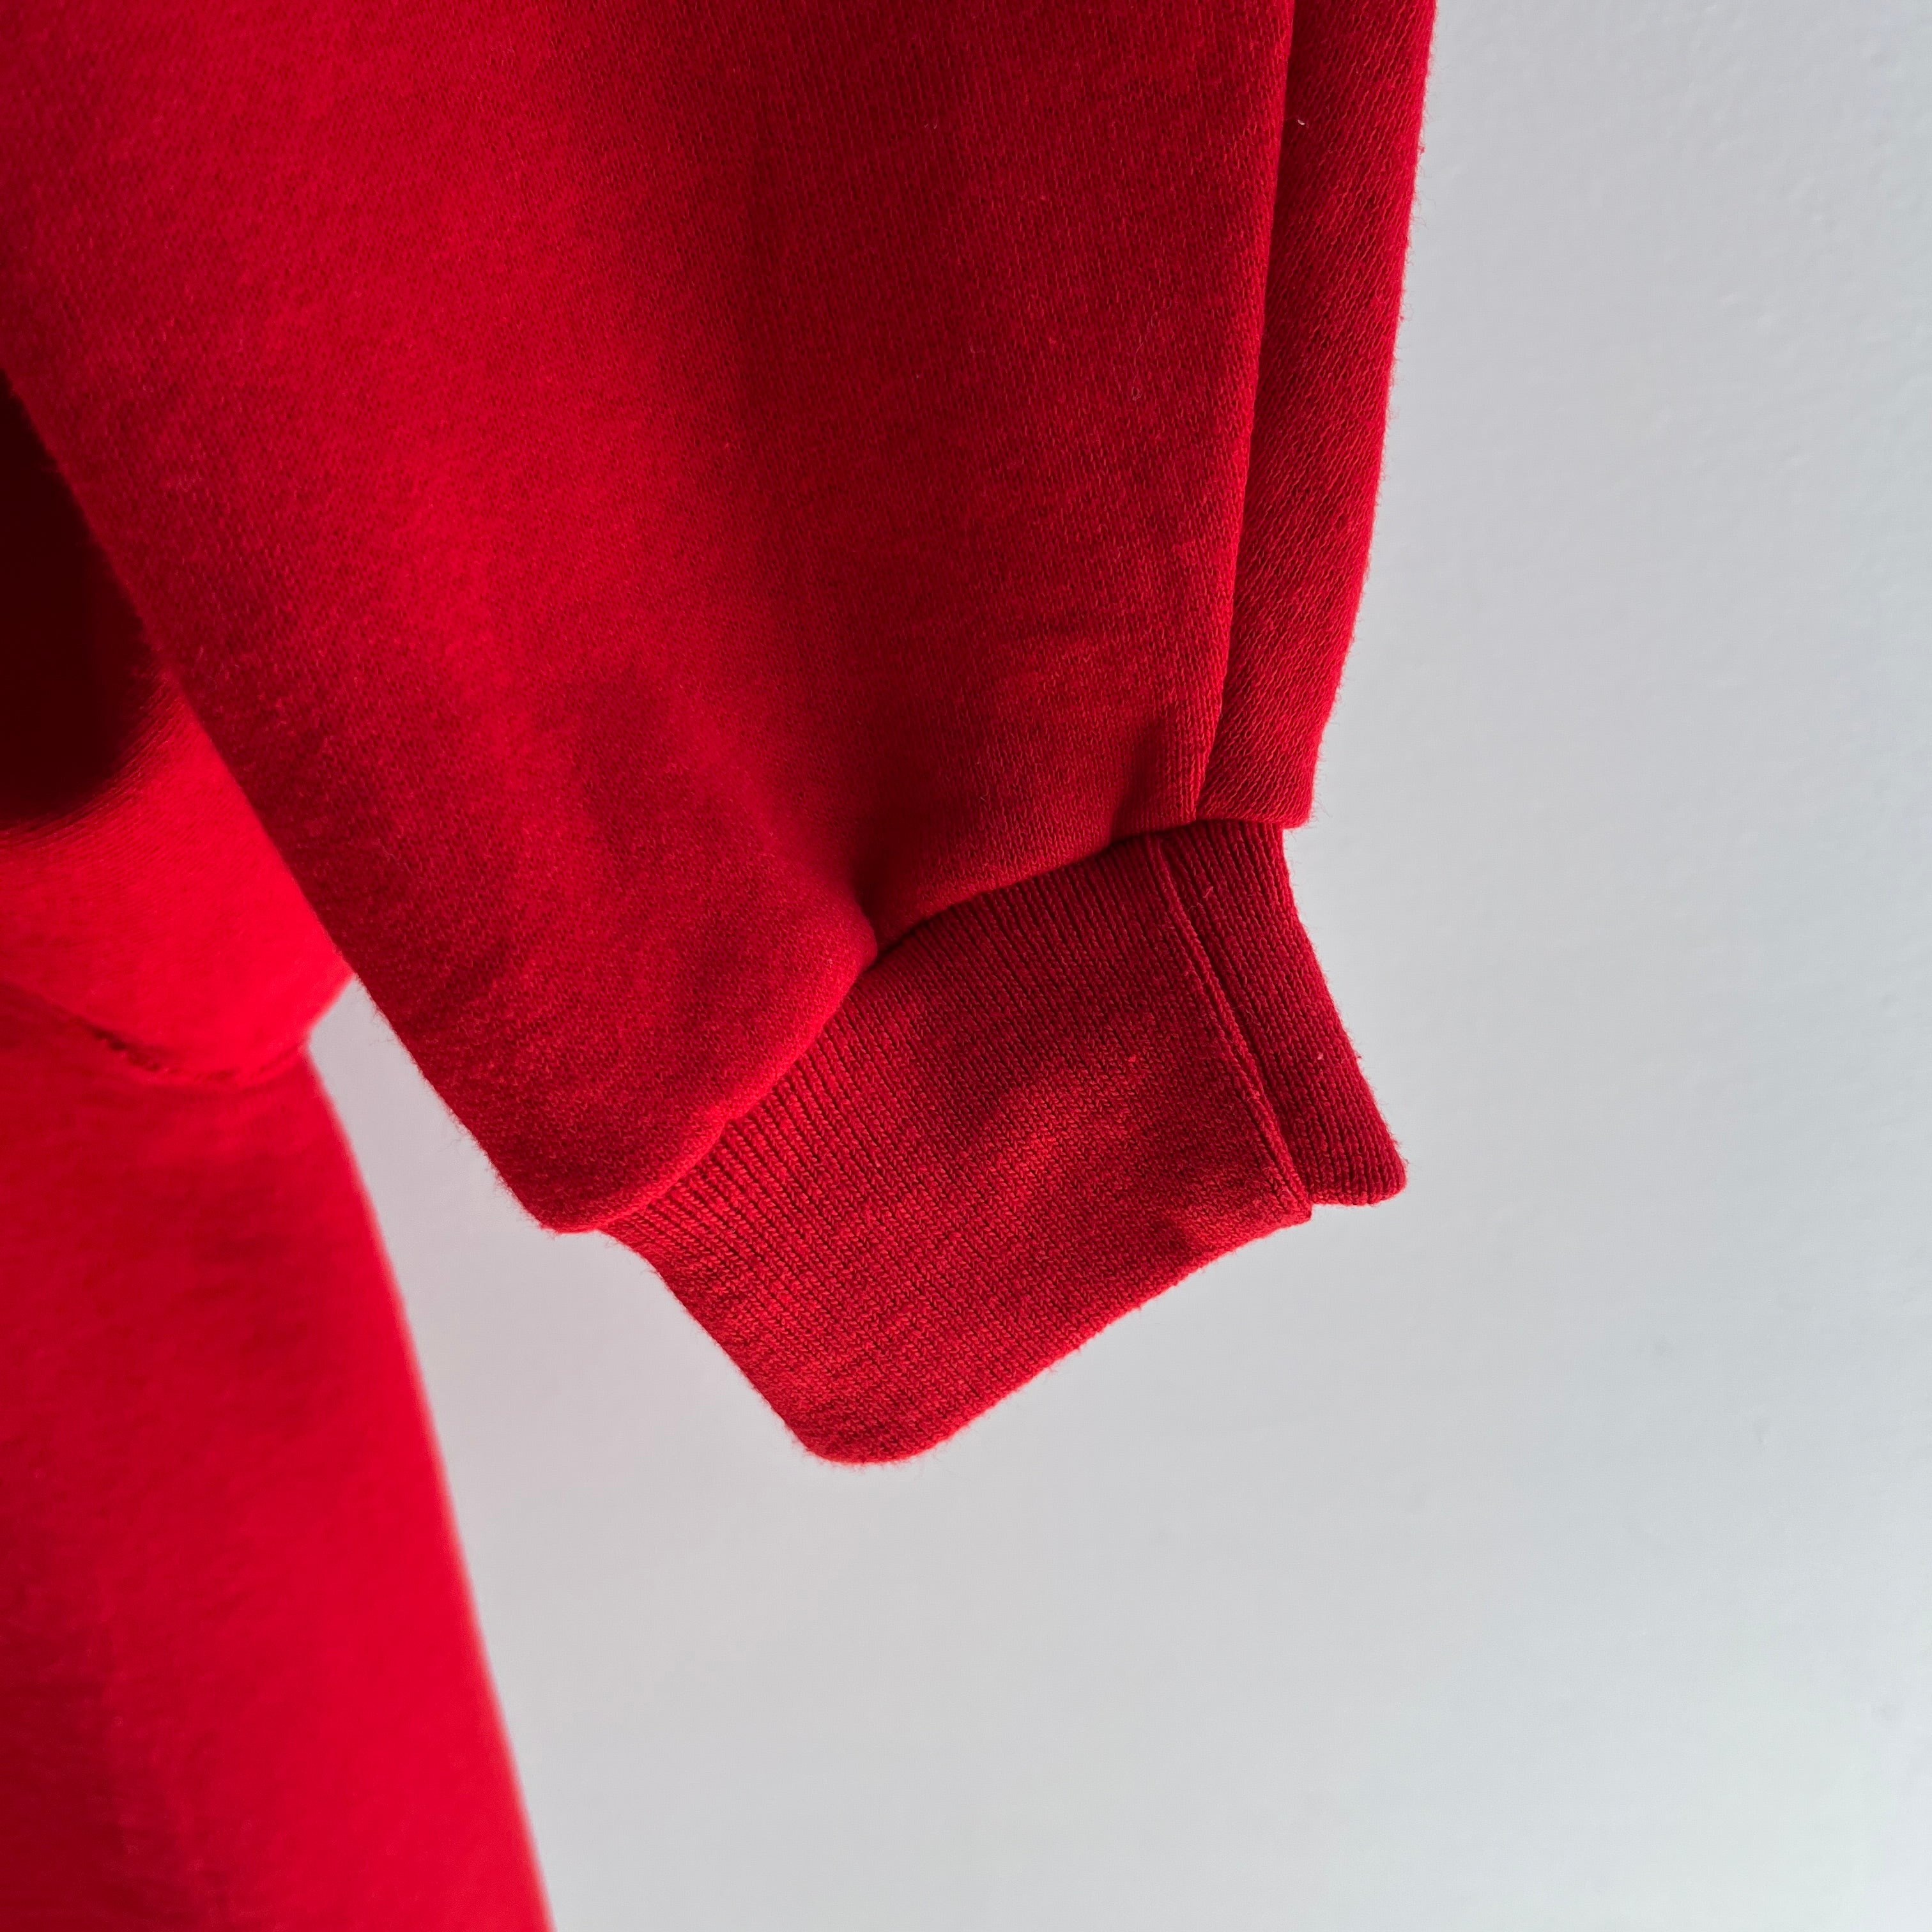 1980s Barely Worn Soft and Cozy Stop Sign Red Longer Raglan Sweatshirt